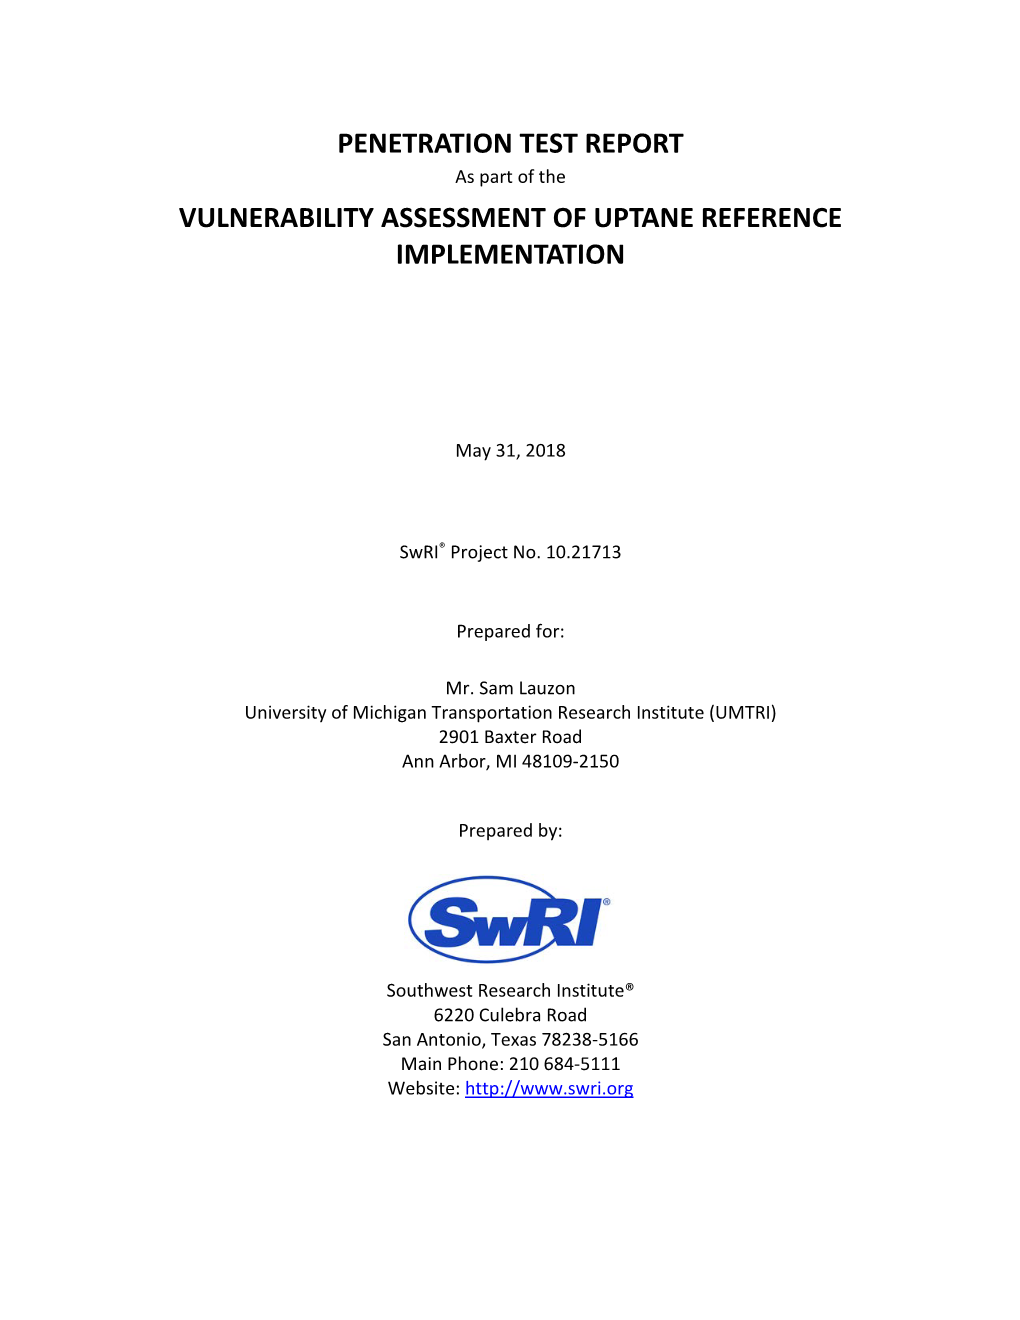 Penetration Test Report Vulnerability Assessment